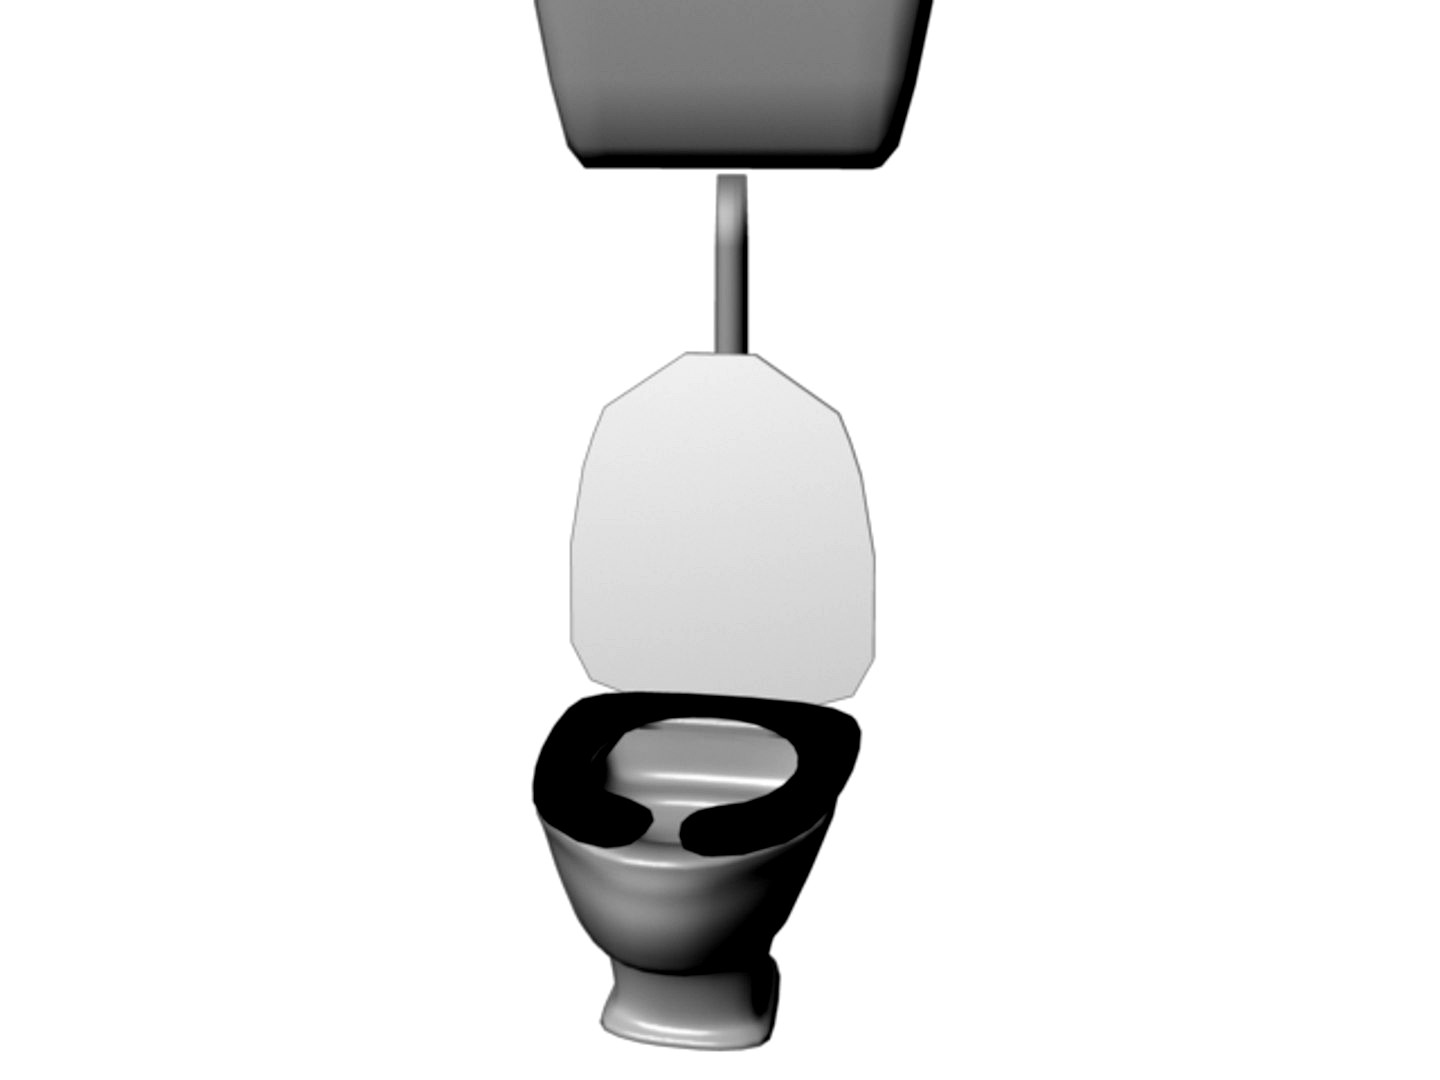 Flush Toilet